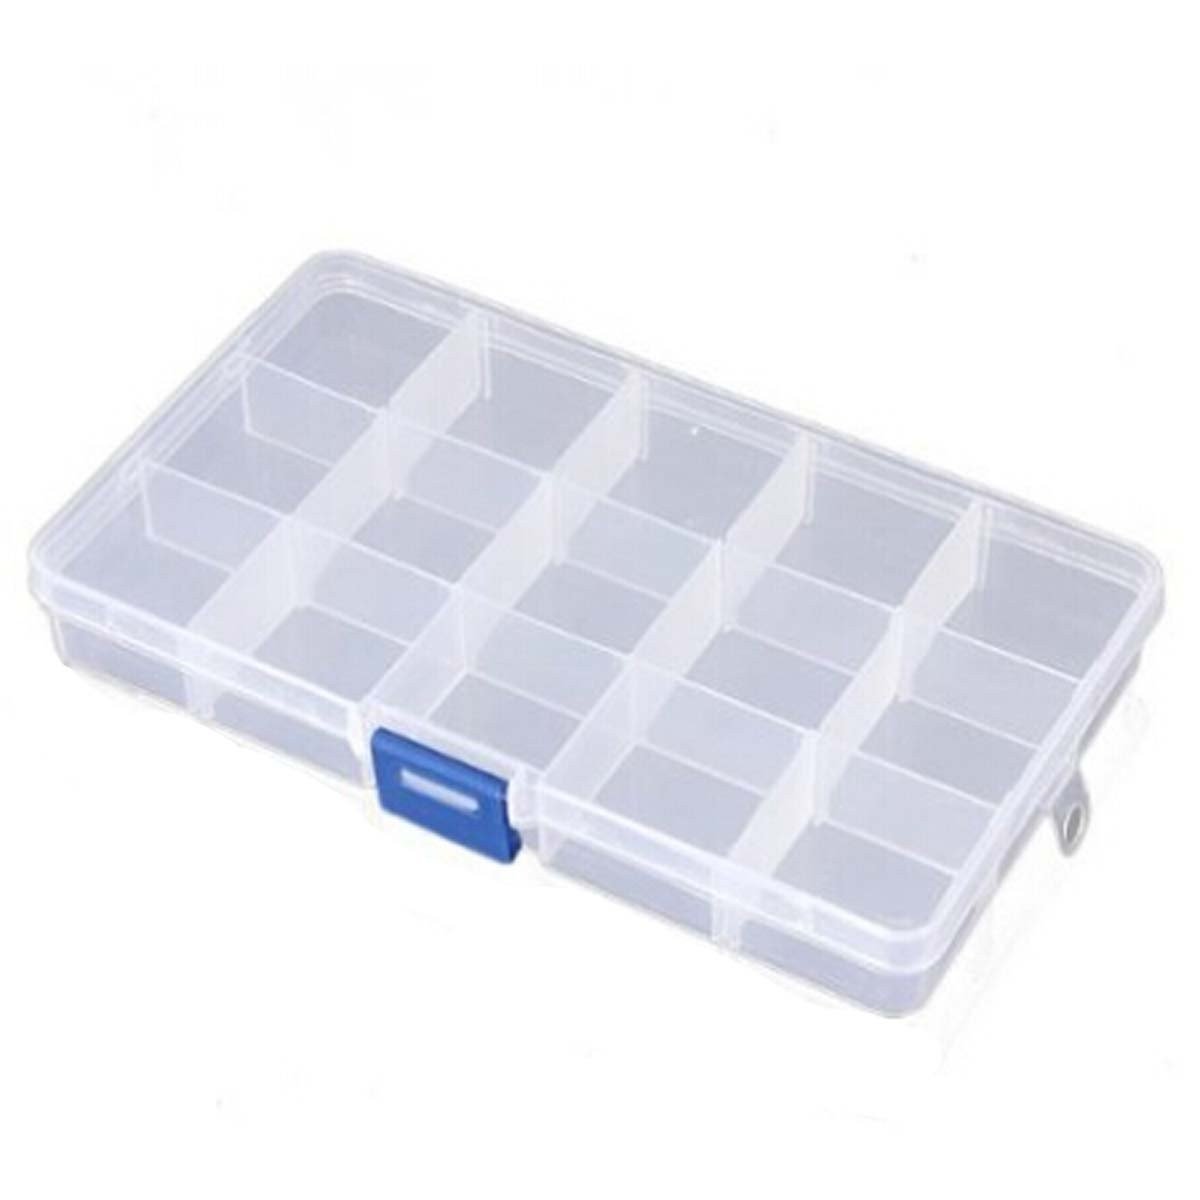 Plastic Storage Box - 15 Compartments - The Hardware Stop